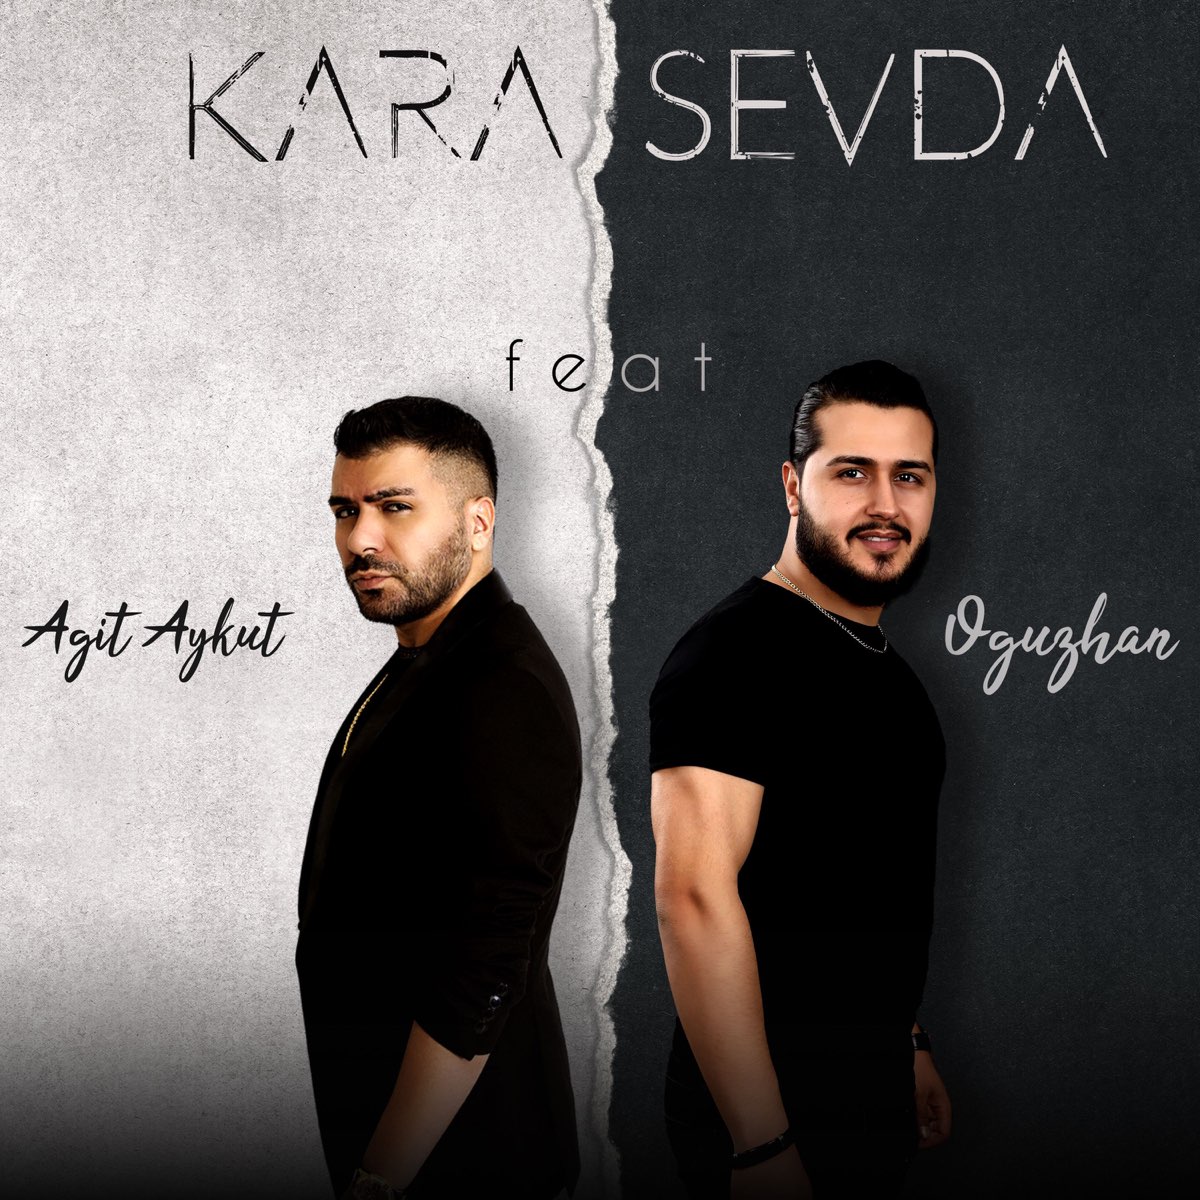 Kara Sevda (feat. Oğuzhan) - Single - Album by Agit Aykut - Apple Music